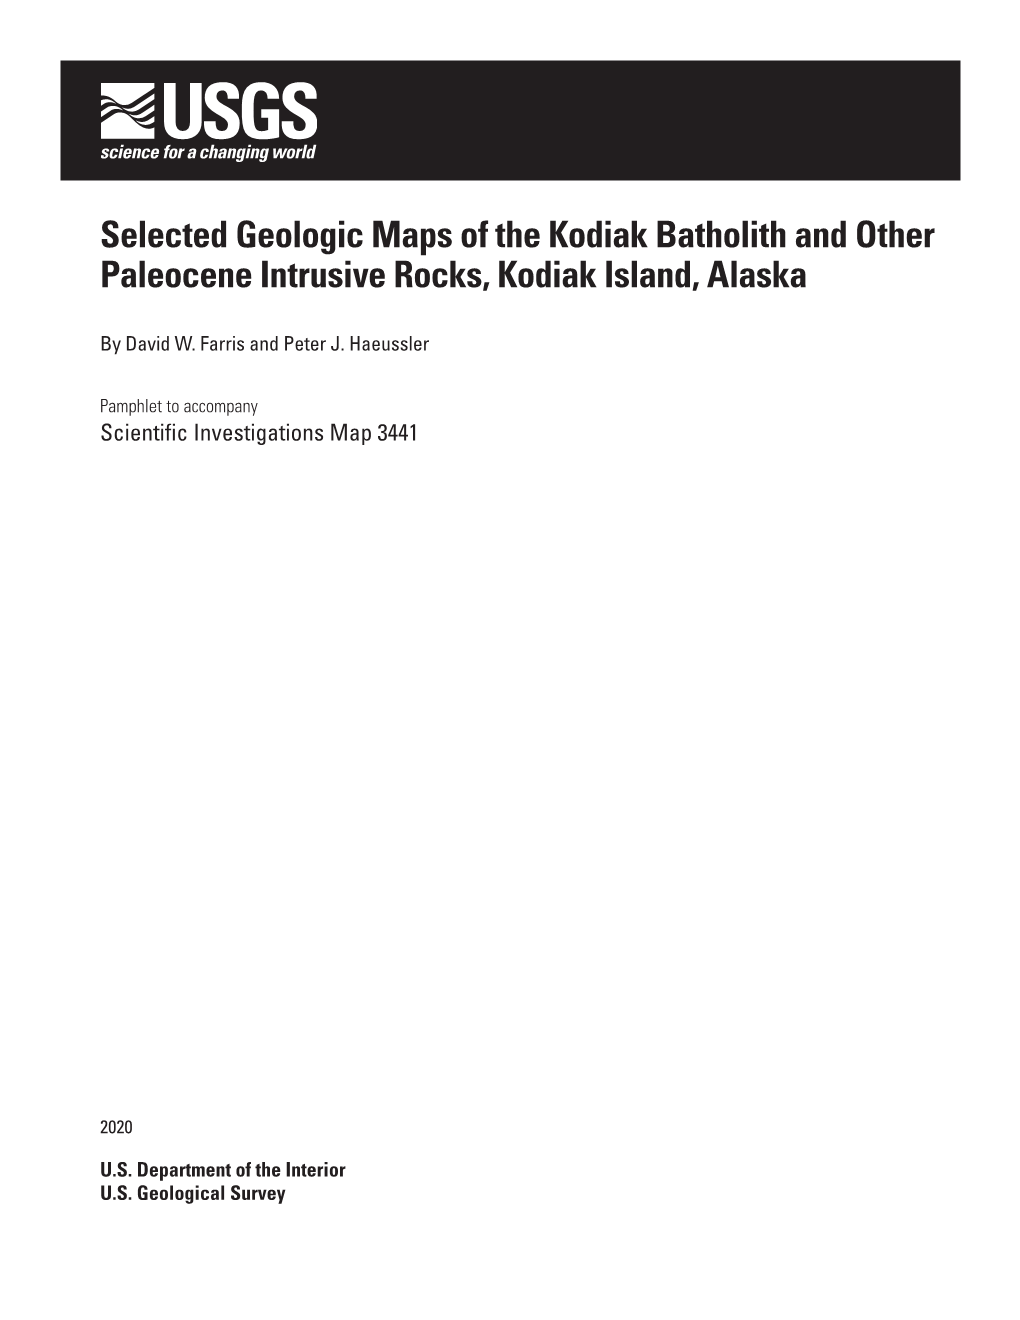 Selected Geologic Maps of the Kodiak Batholith and Other Paleocene Intrusive Rocks, Kodiak Island, Alaska